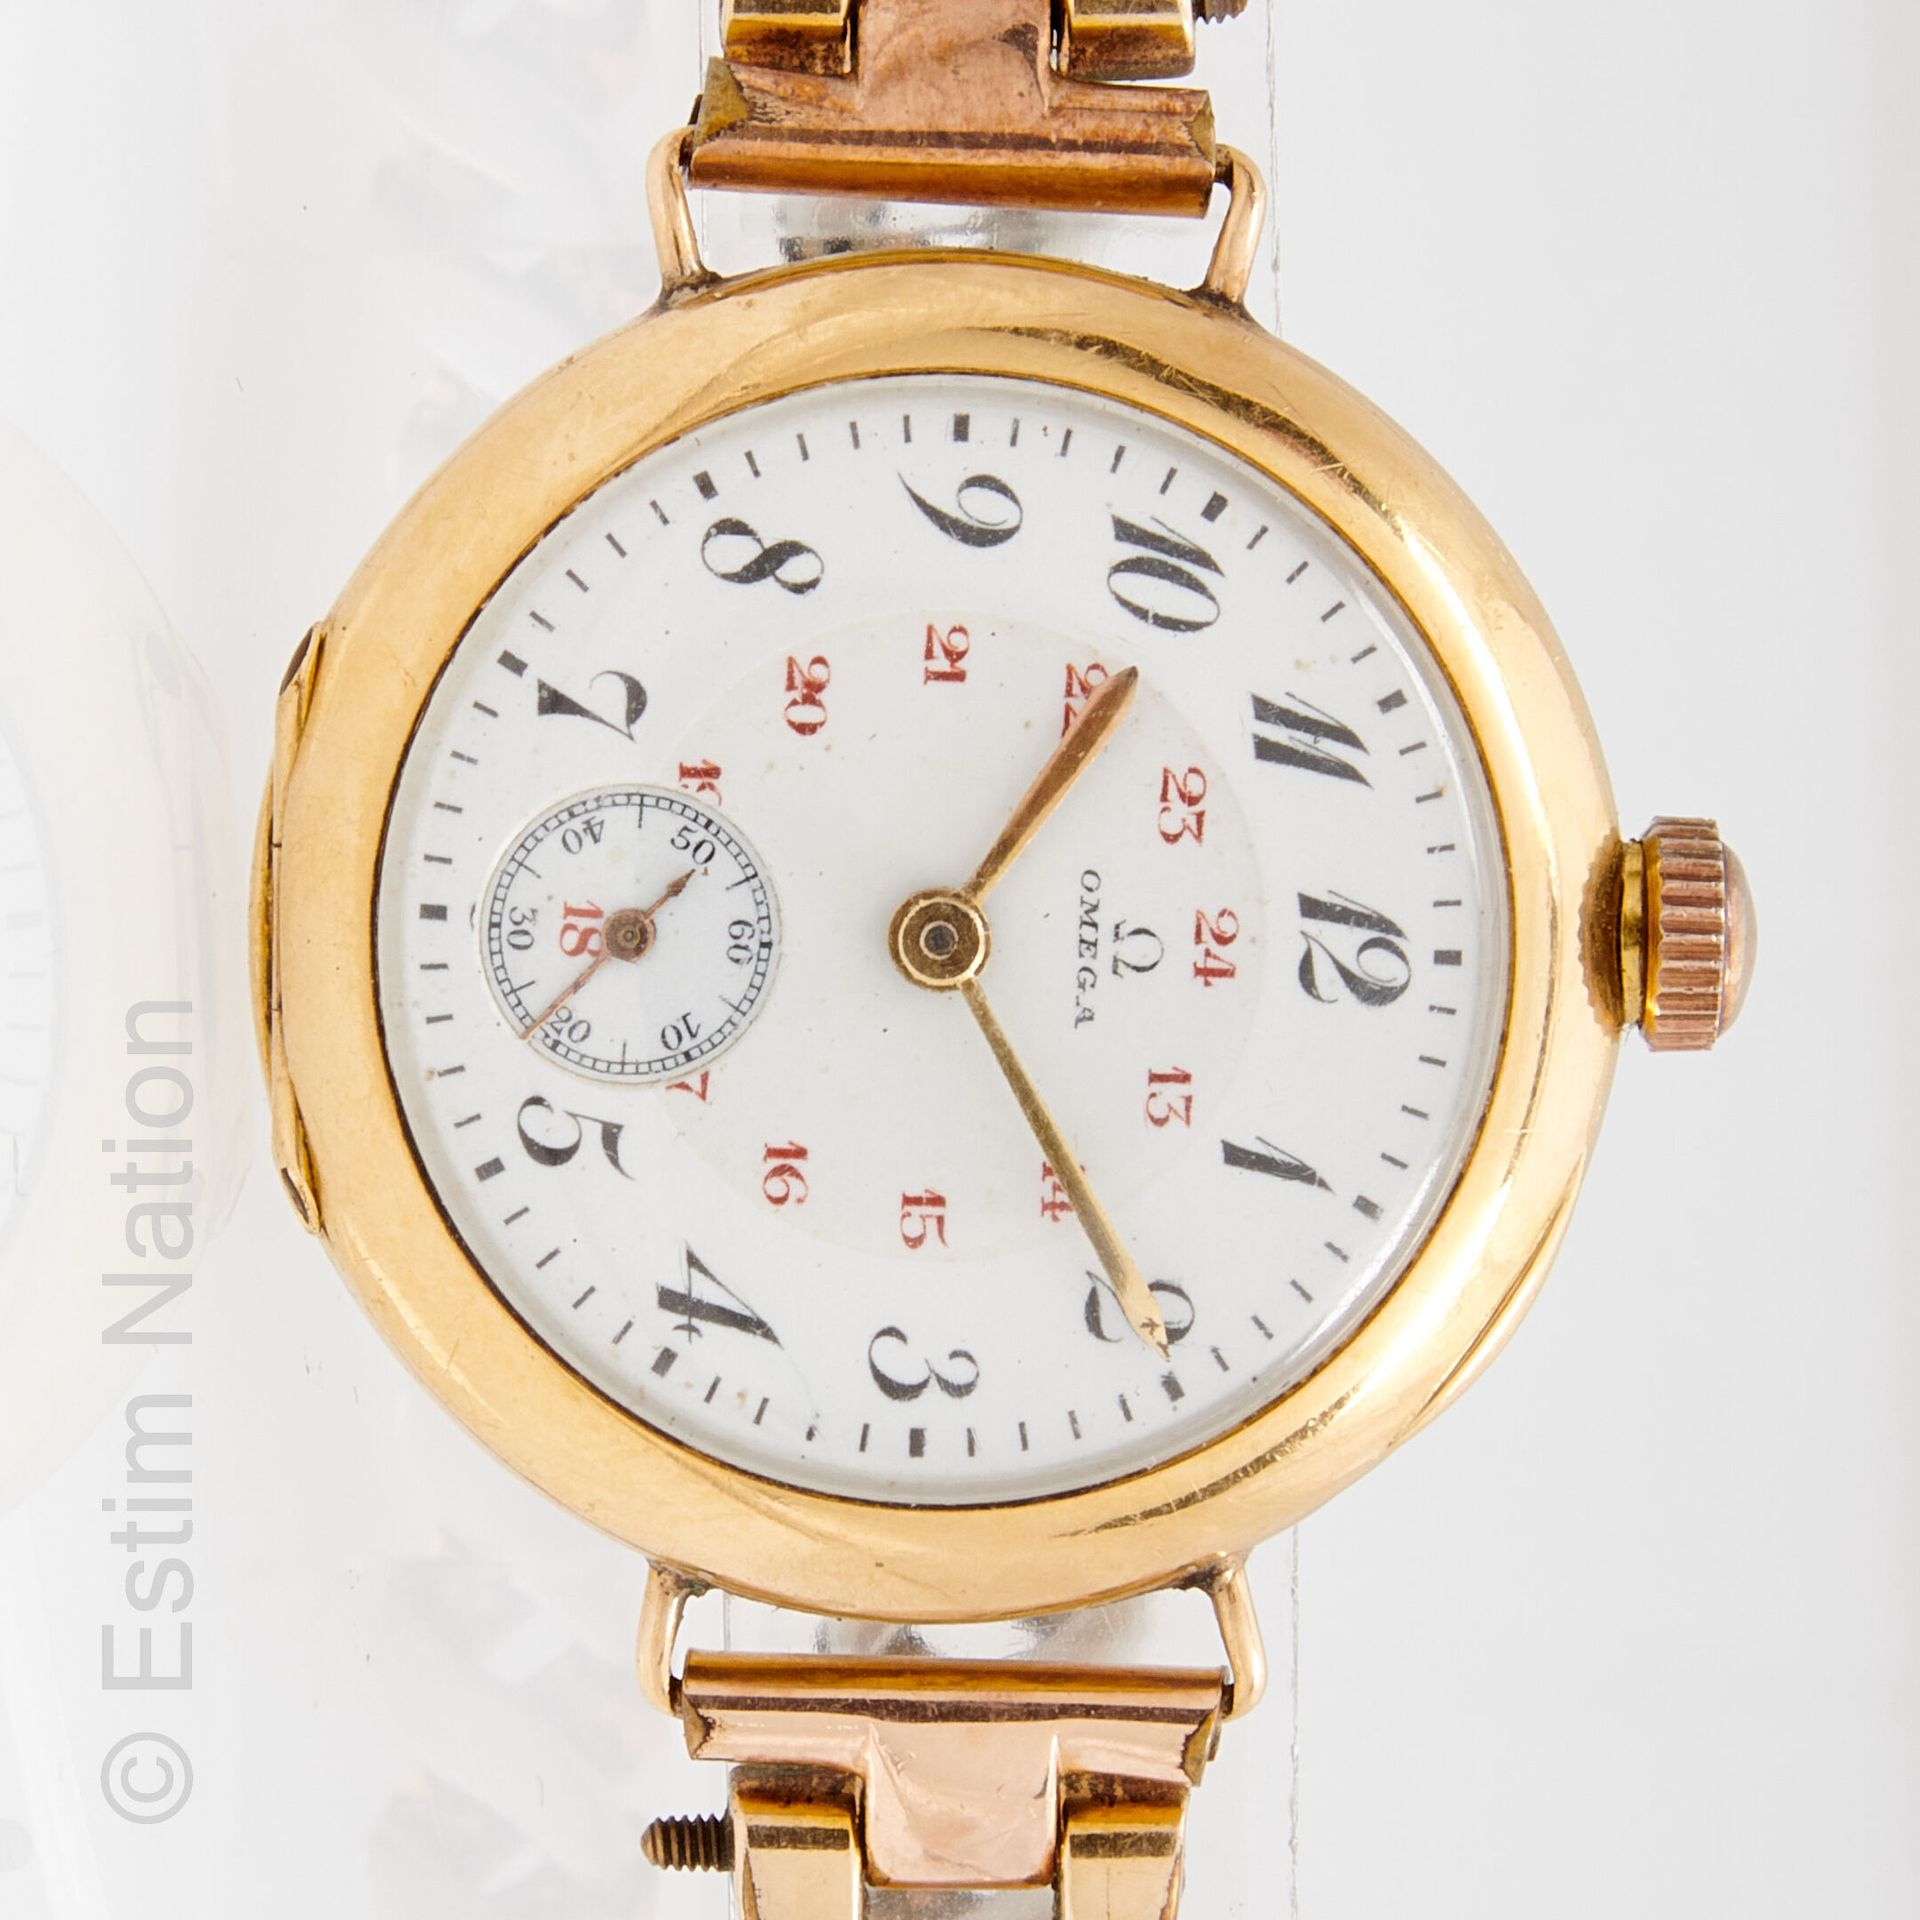 OMEGA - MONTRE DE GOUSSET OR JAUNE OMEGA - Pocket watch in 18K yellow gold (750 &hellip;